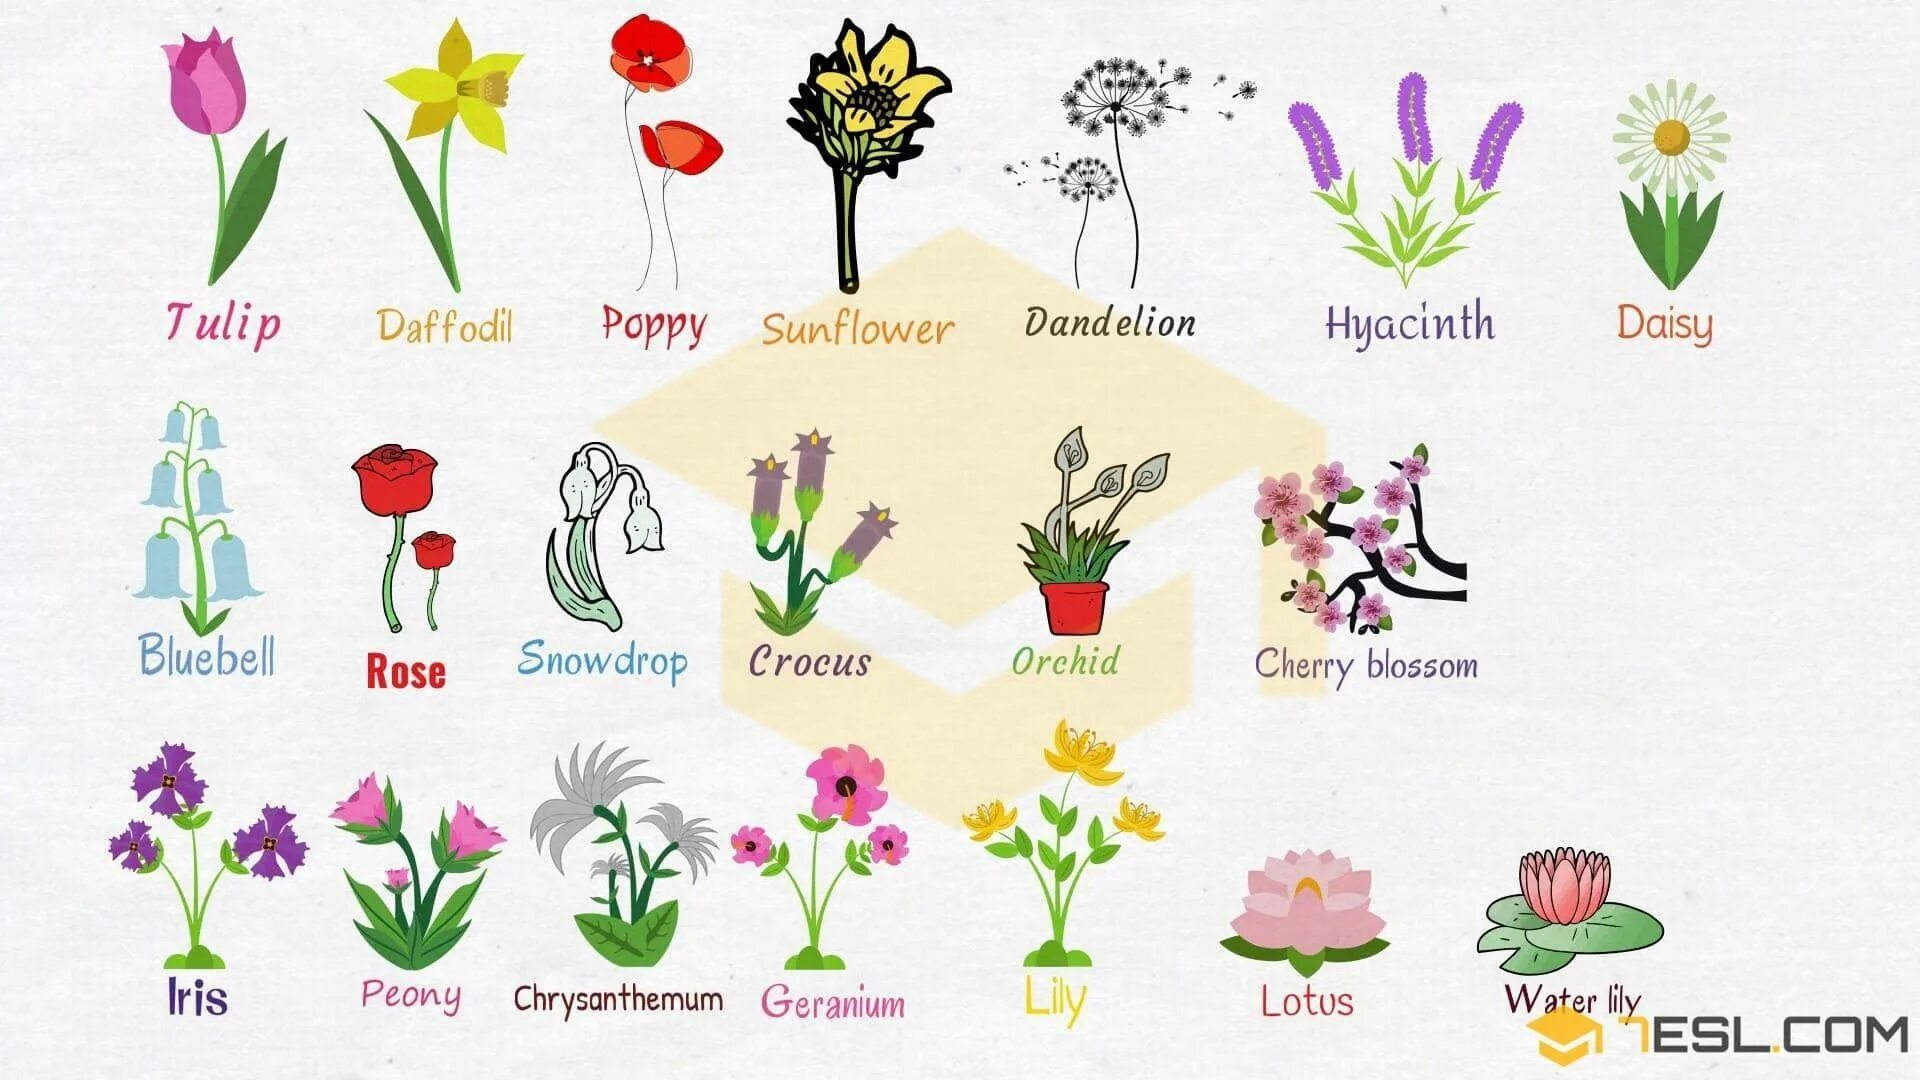 Названия цветов растений. Цветы названия на английском. Названия цветов на английском языке растений. Рисунки цветов с названиями.